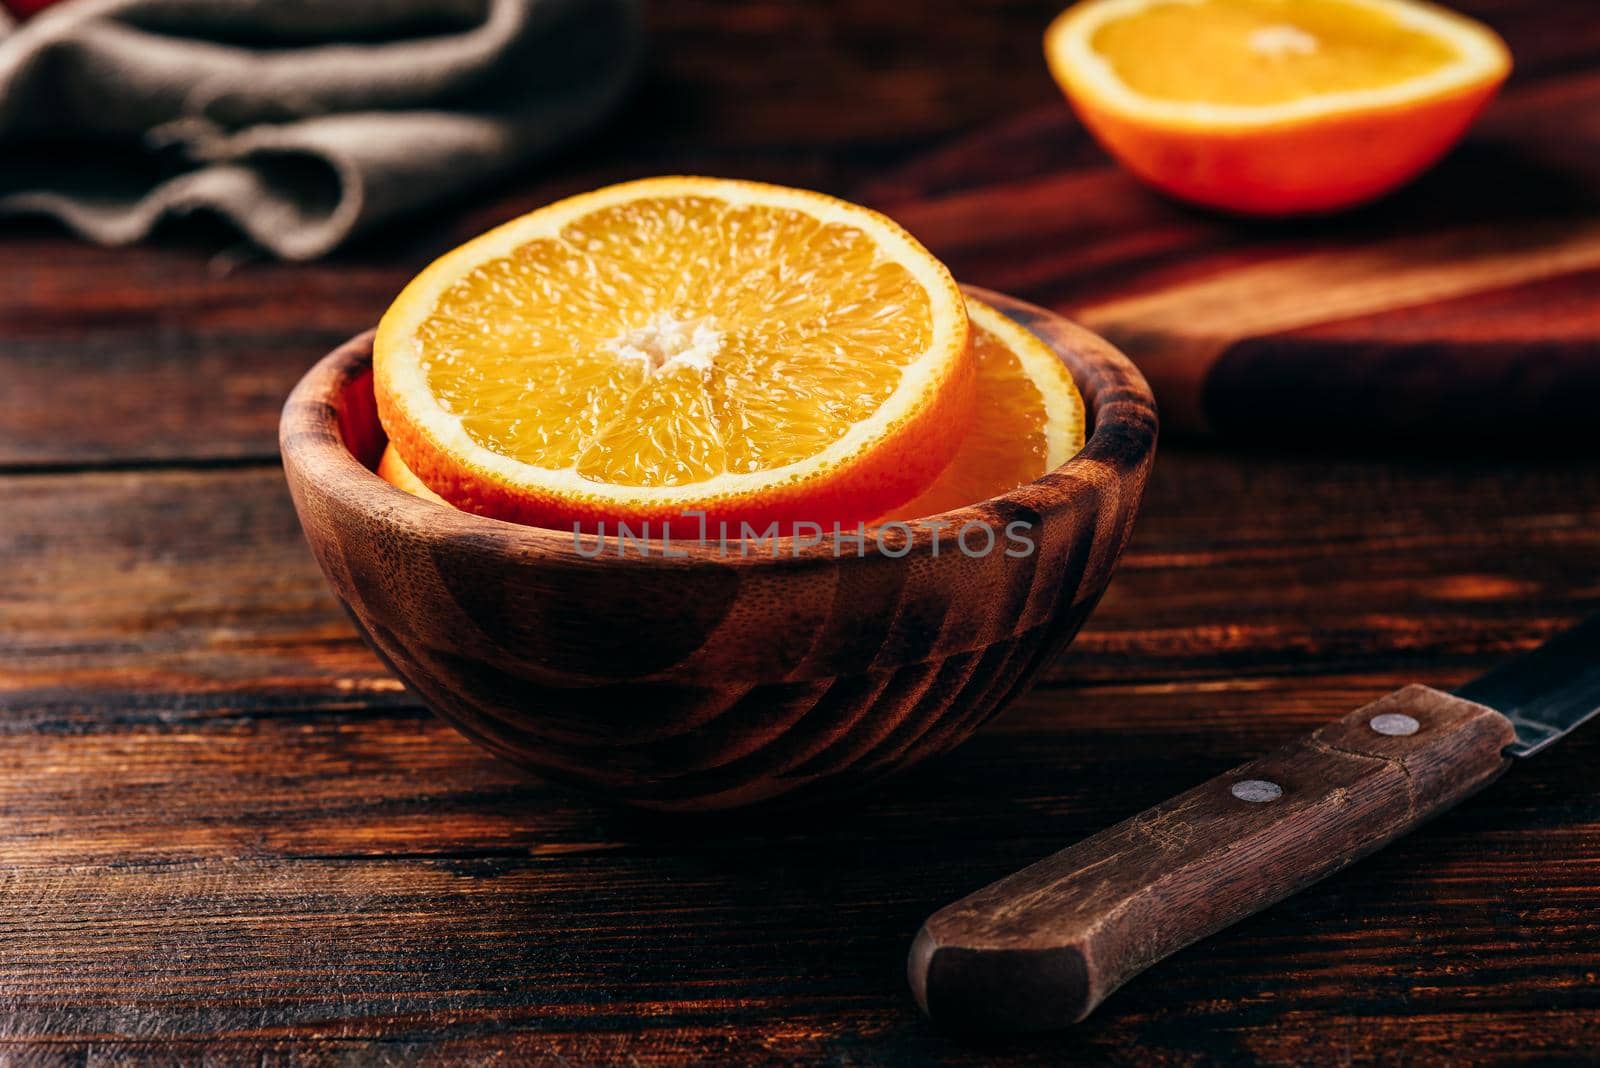 Sliced orange in a wooden bowl by Seva_blsv